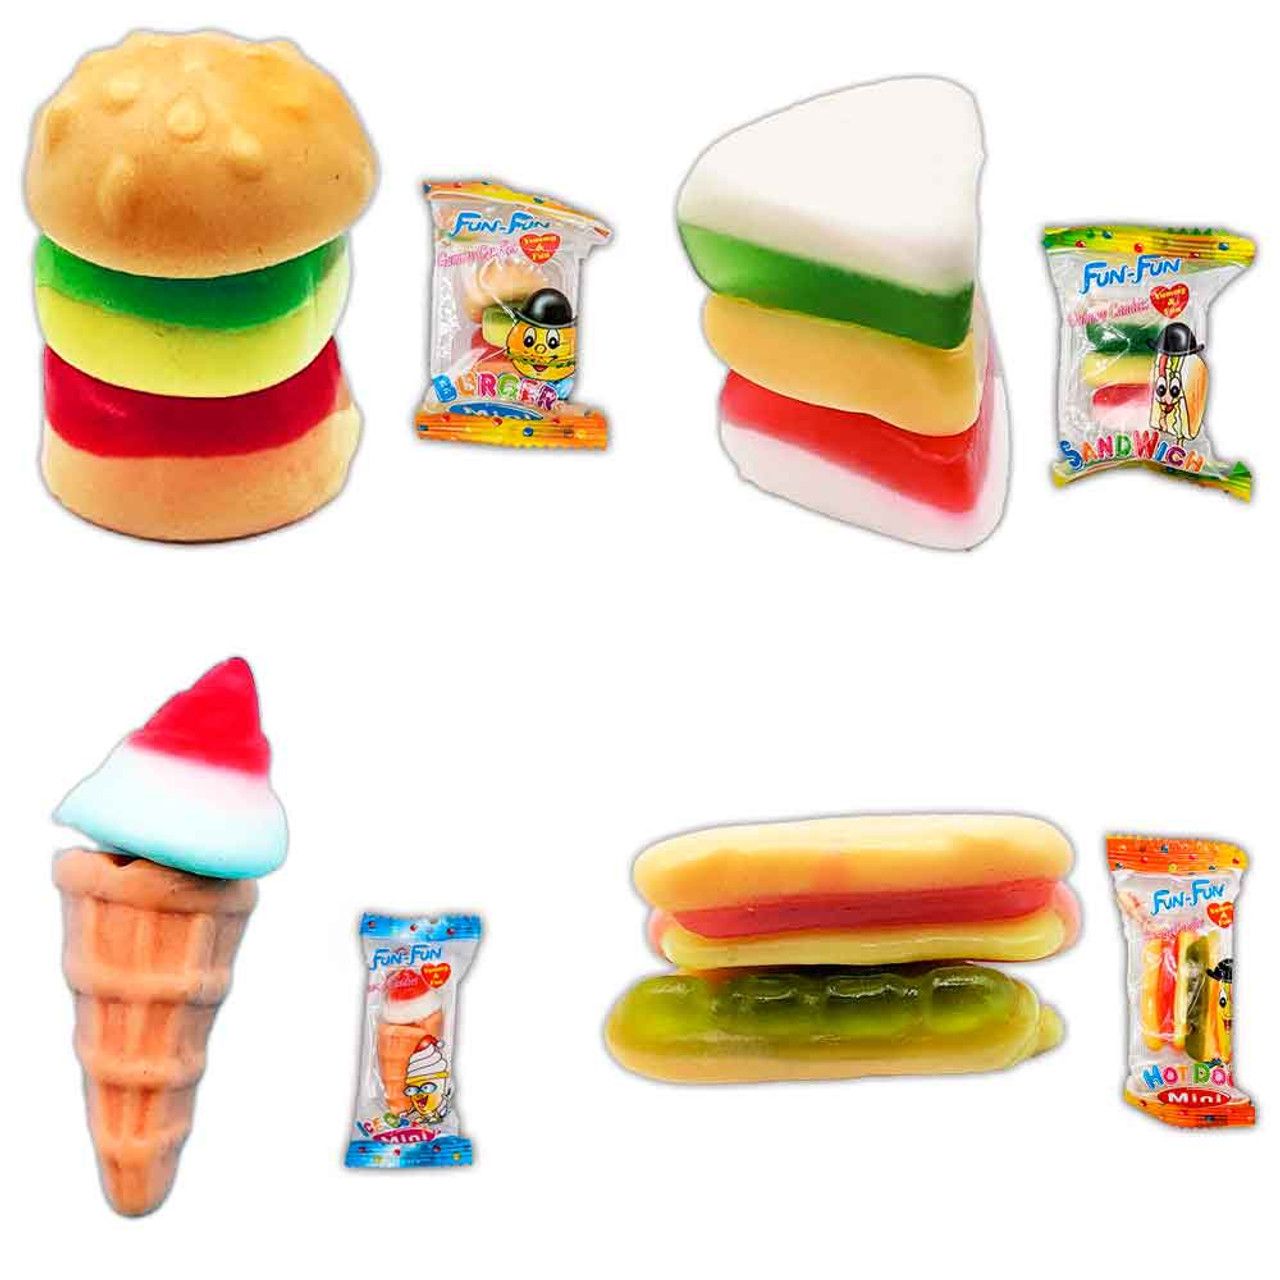 Assorted Fun-Fun mini gummy candies. The gummis come in different shapes that include mini gummy burgers, mini gummy hot dogs, mini gummy sandwiches and mini ice cream cones from Fun-Fun.